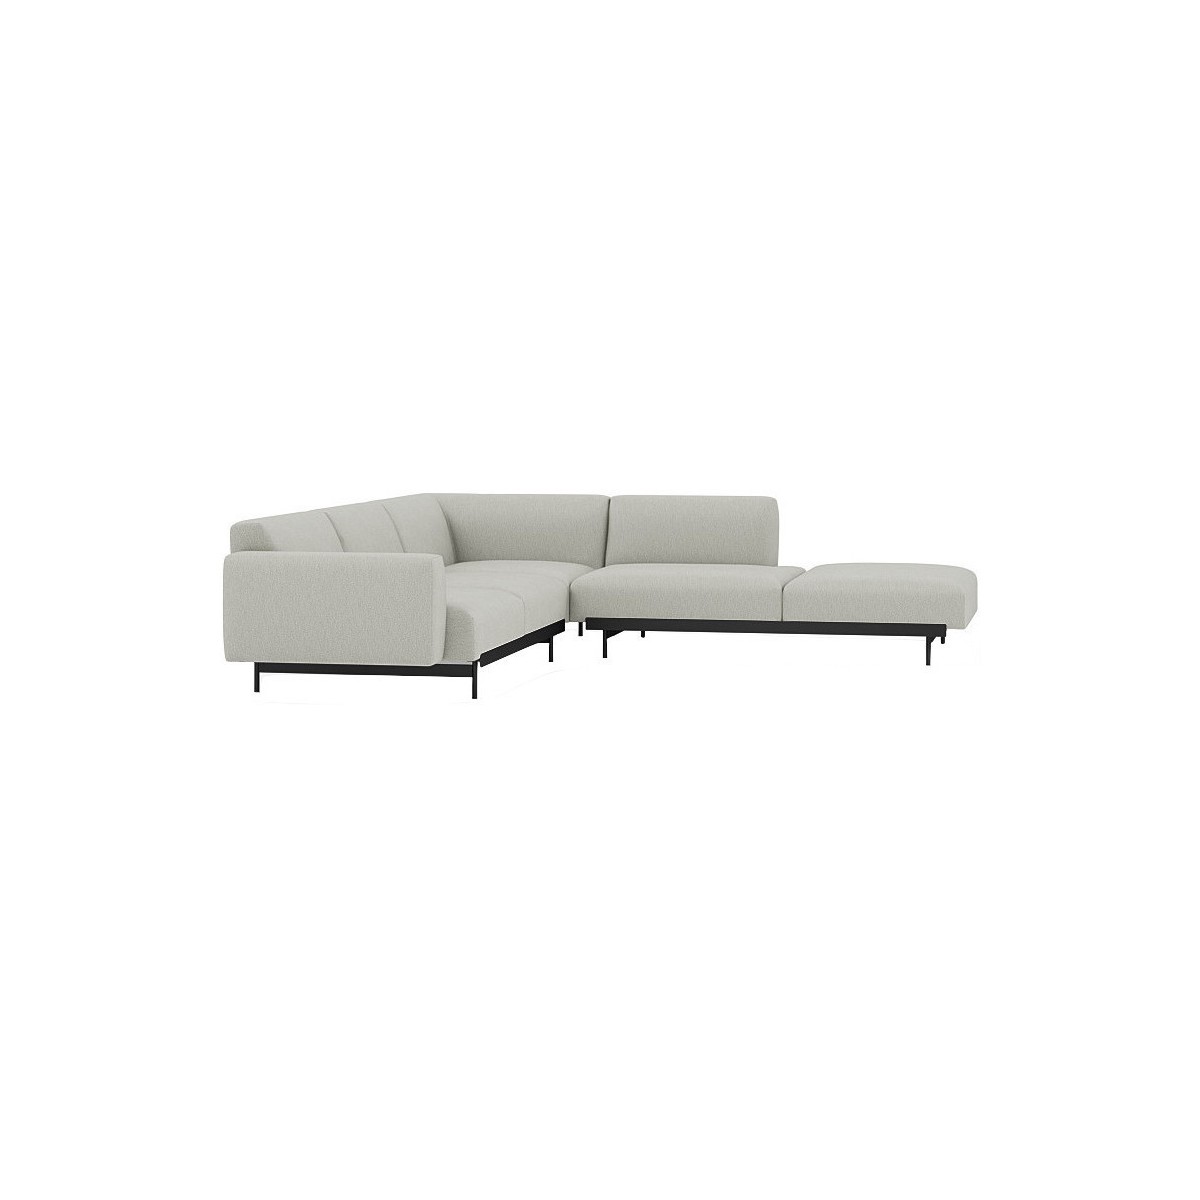 Clay 12 / black – In Situ corner sofa / configuration 3 – 287 x 287 cm